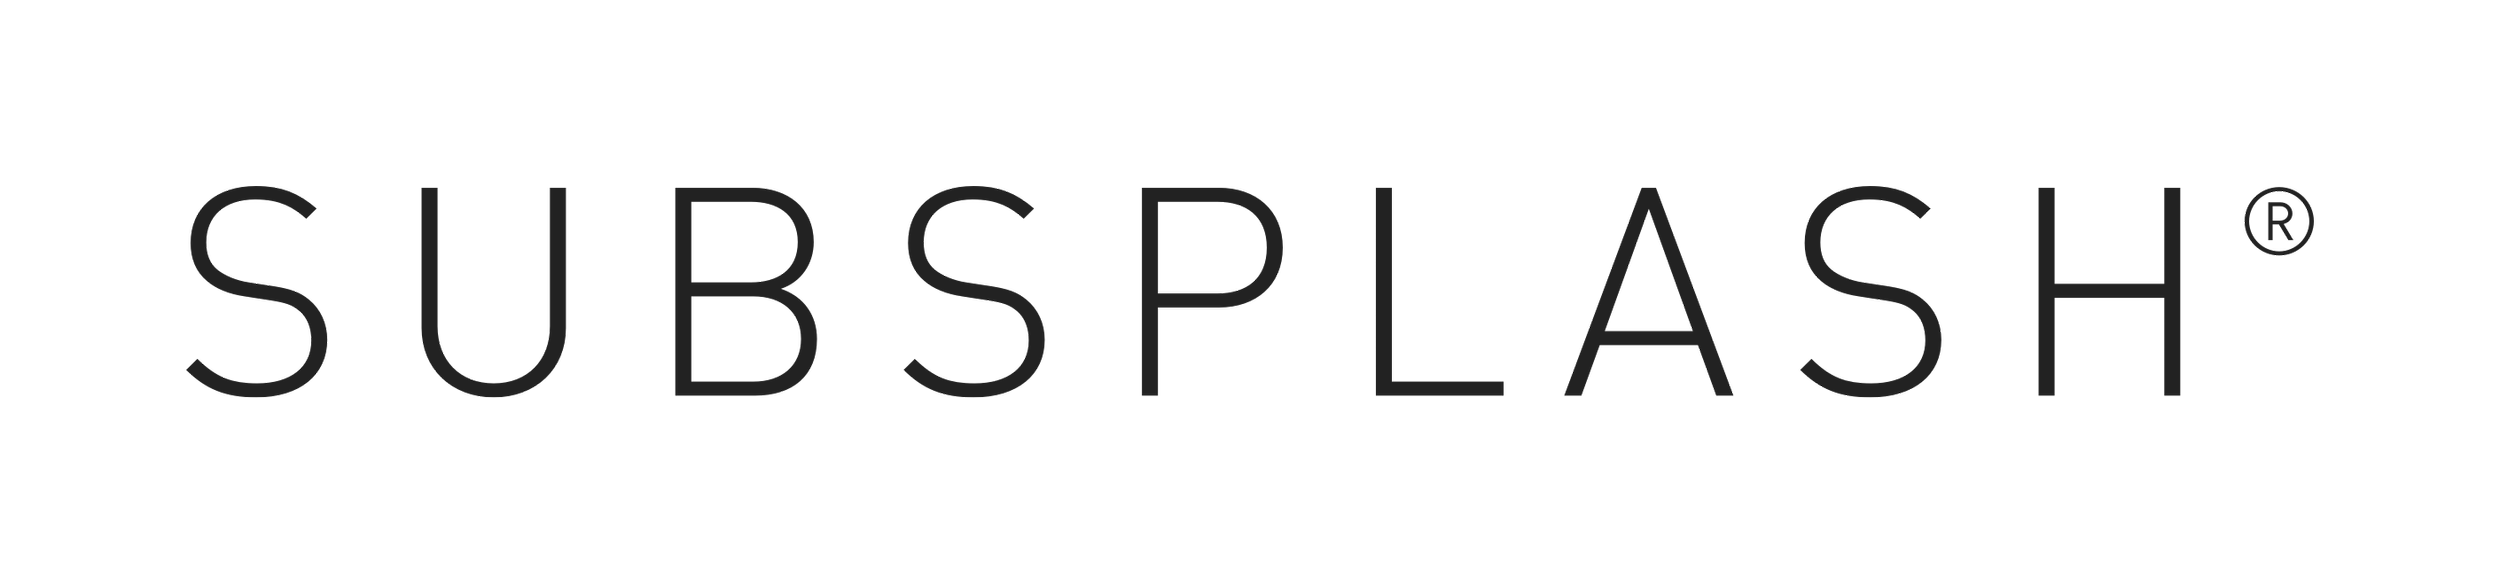 Subsplash Logo Black.png